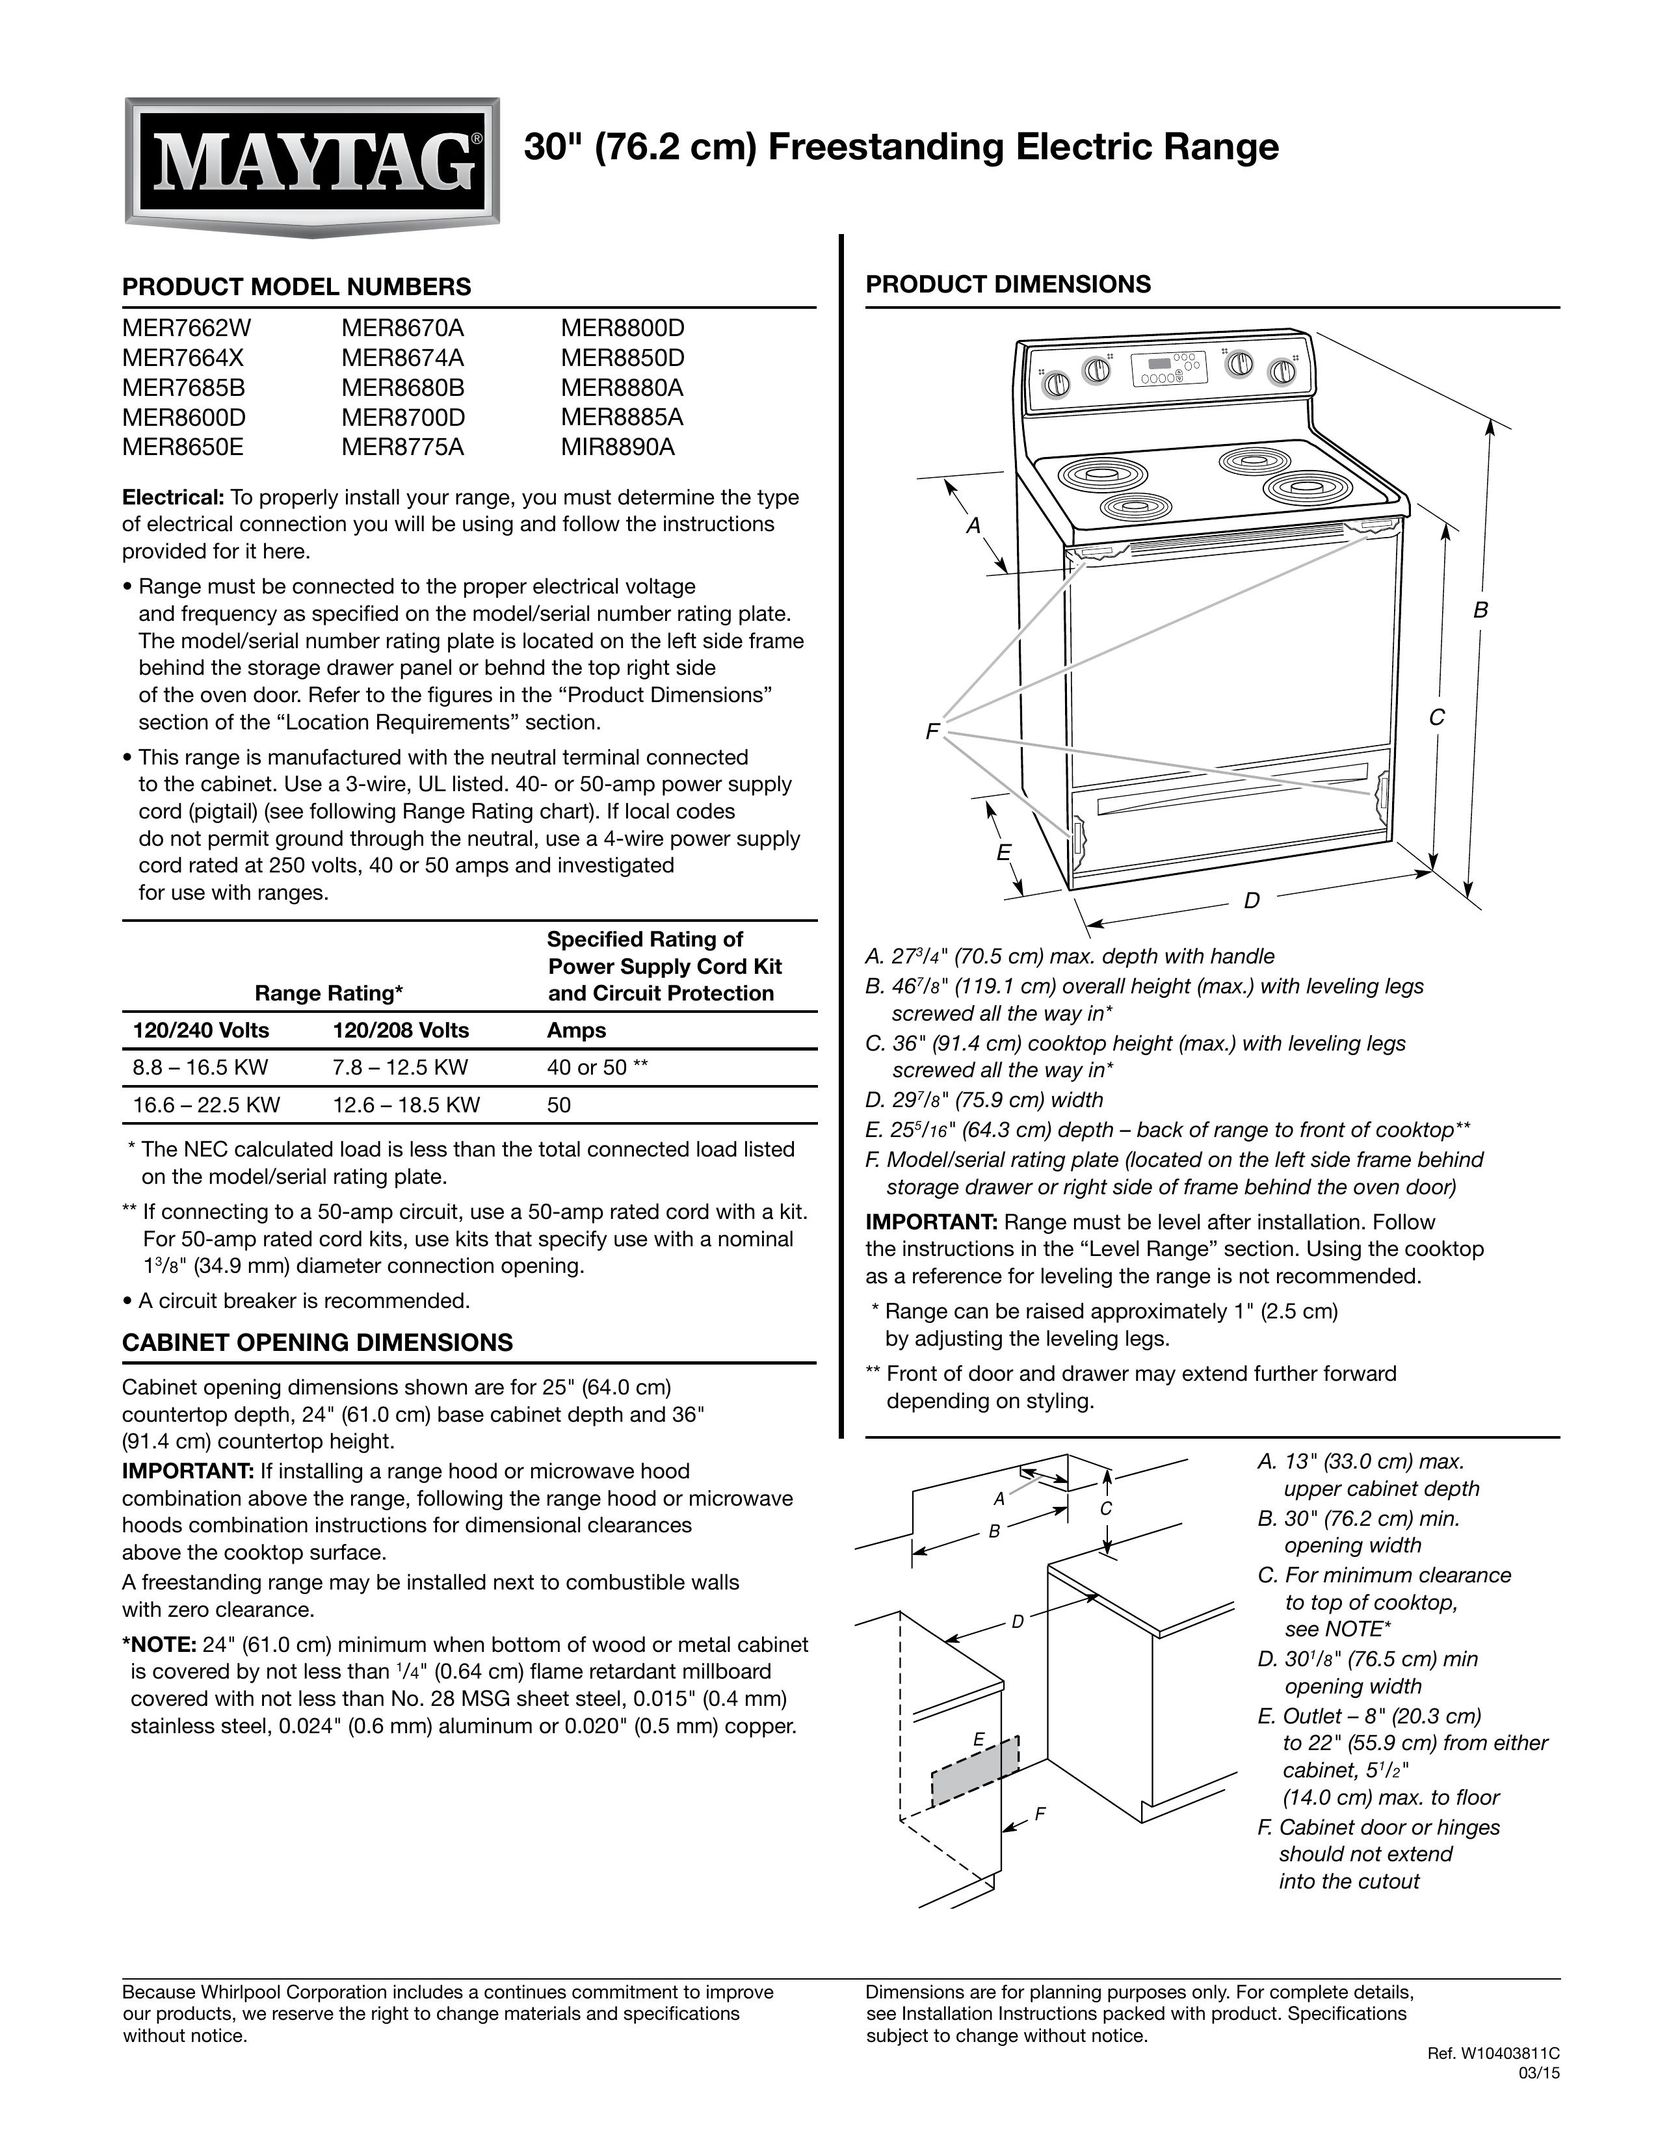 Maytag MER7662W Cooktop User Manual